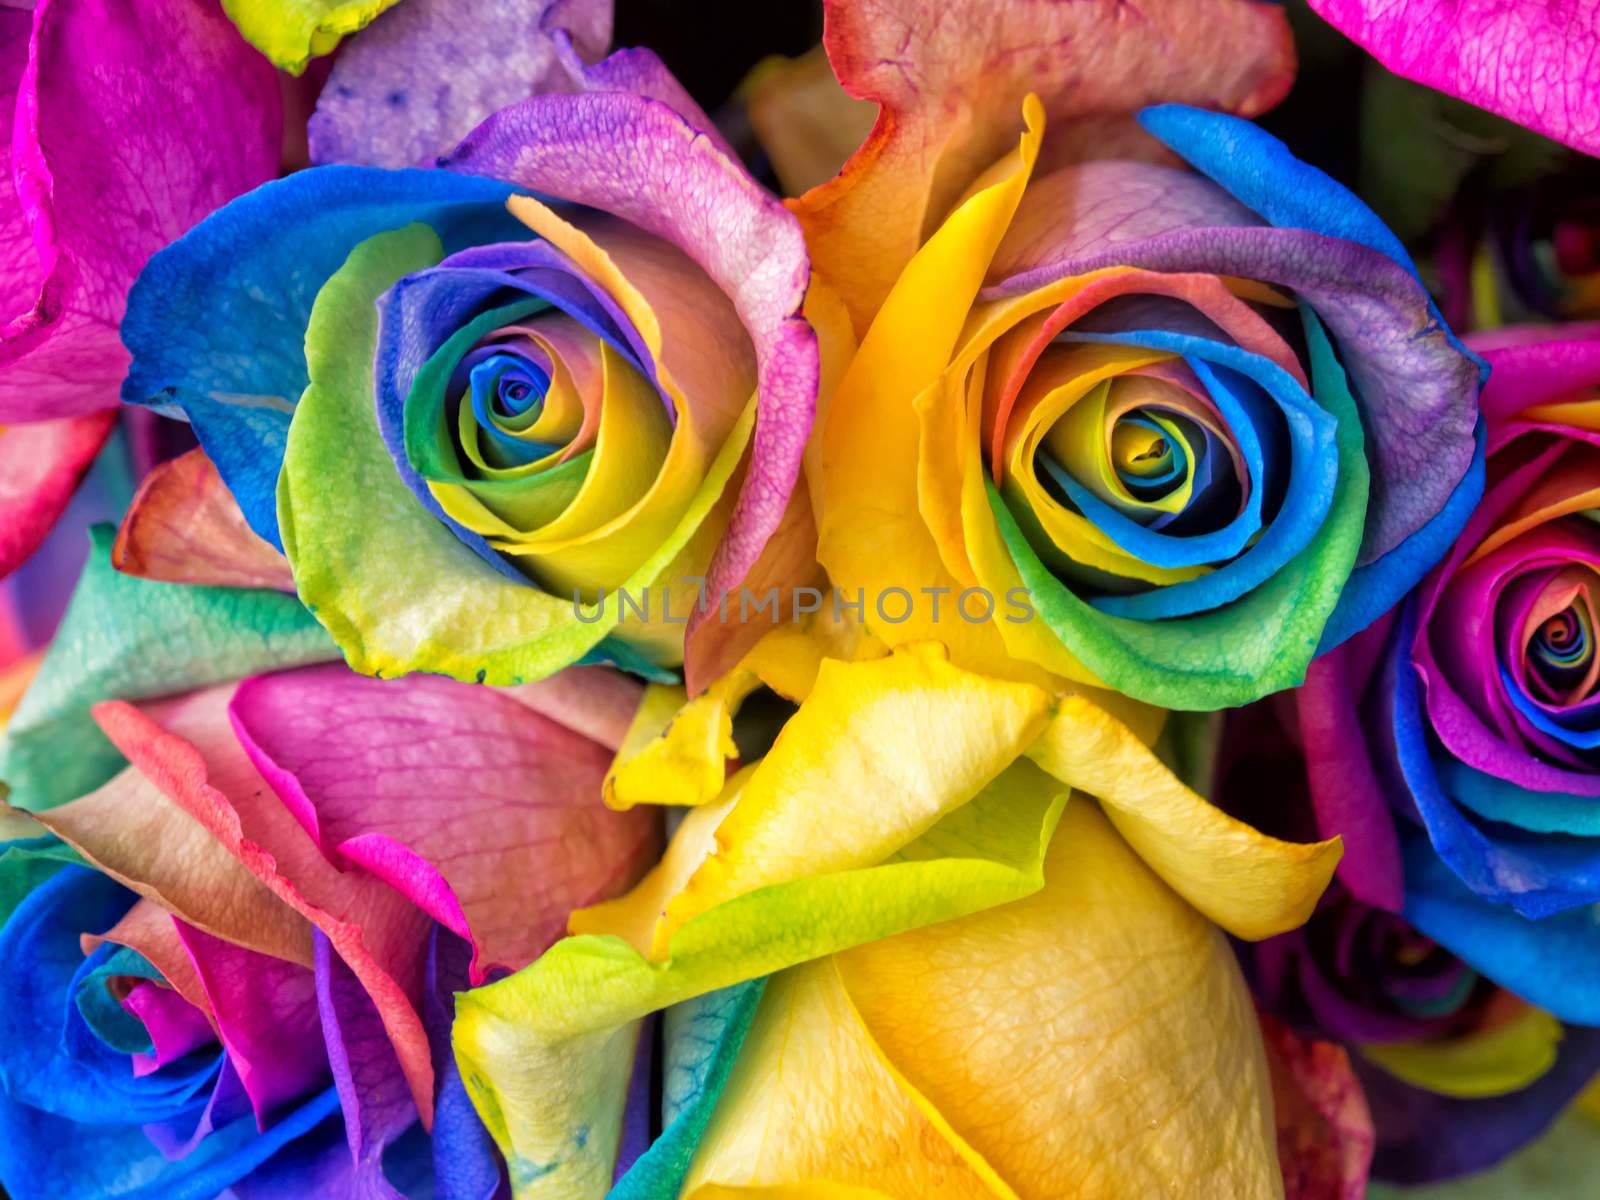 Rainbow rose, colourful roses close-up macro shots.